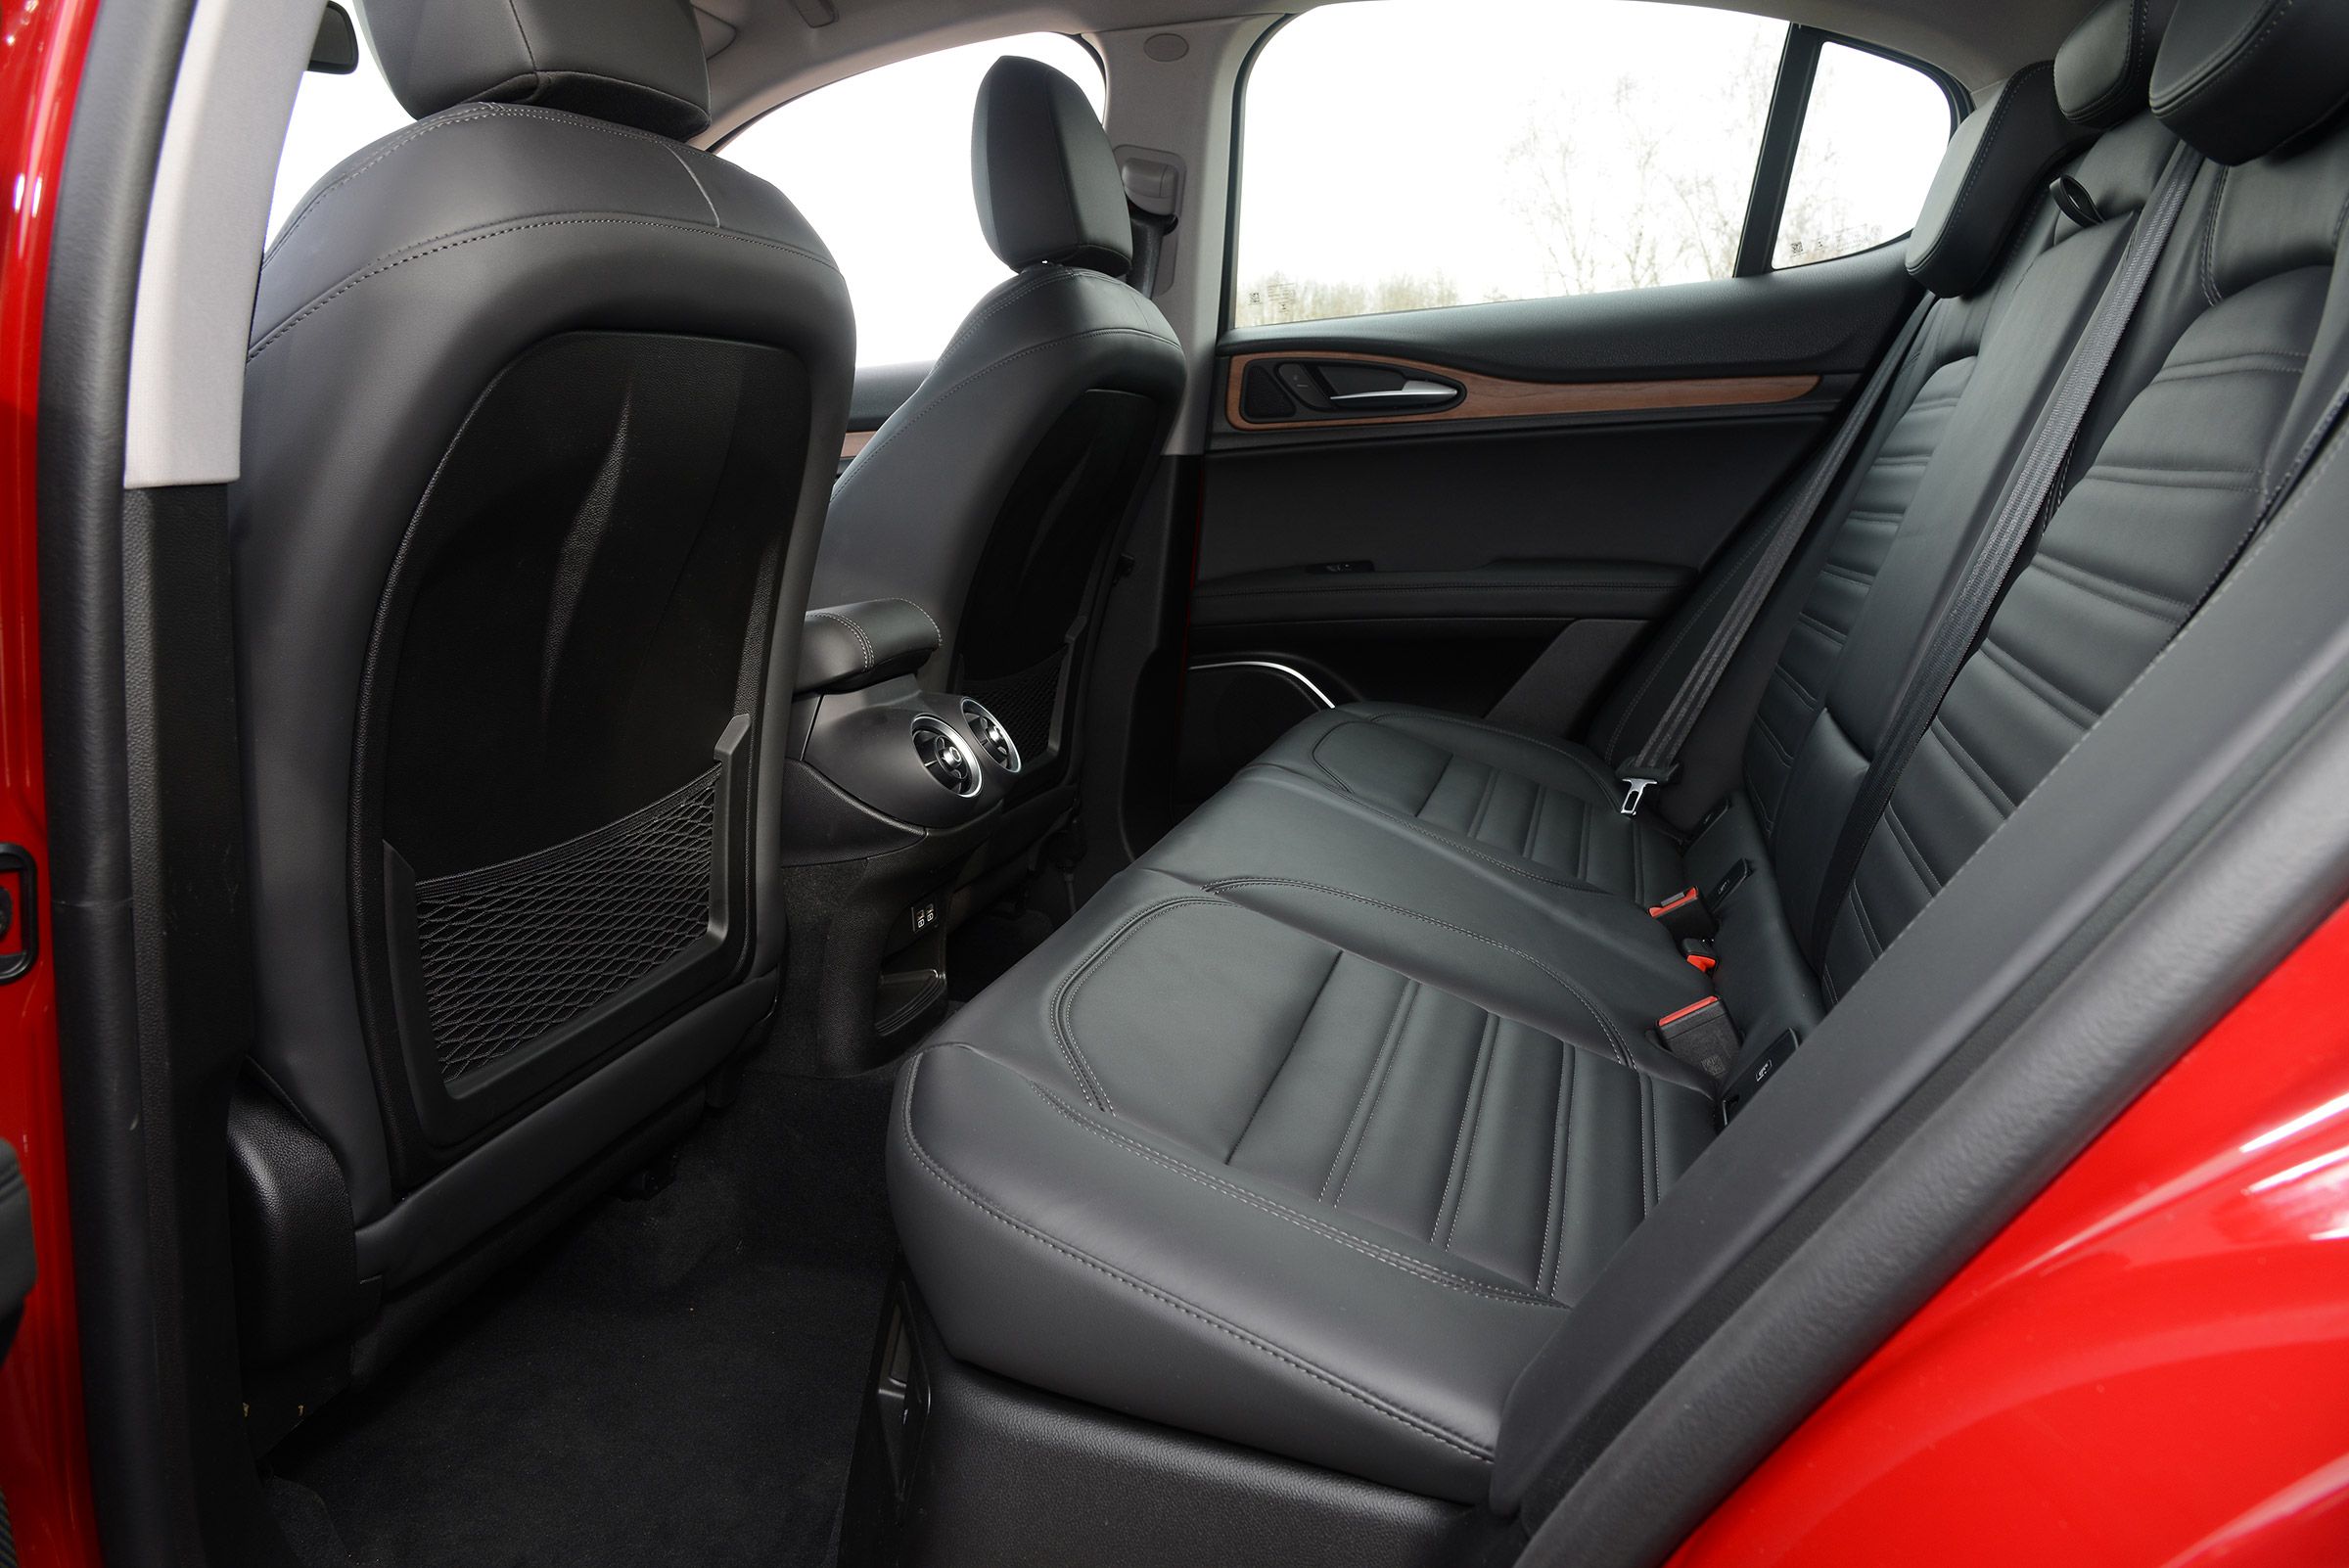 2017 Alfa Romeo Stelvio Interior Seats Rear (View 9 of 23)